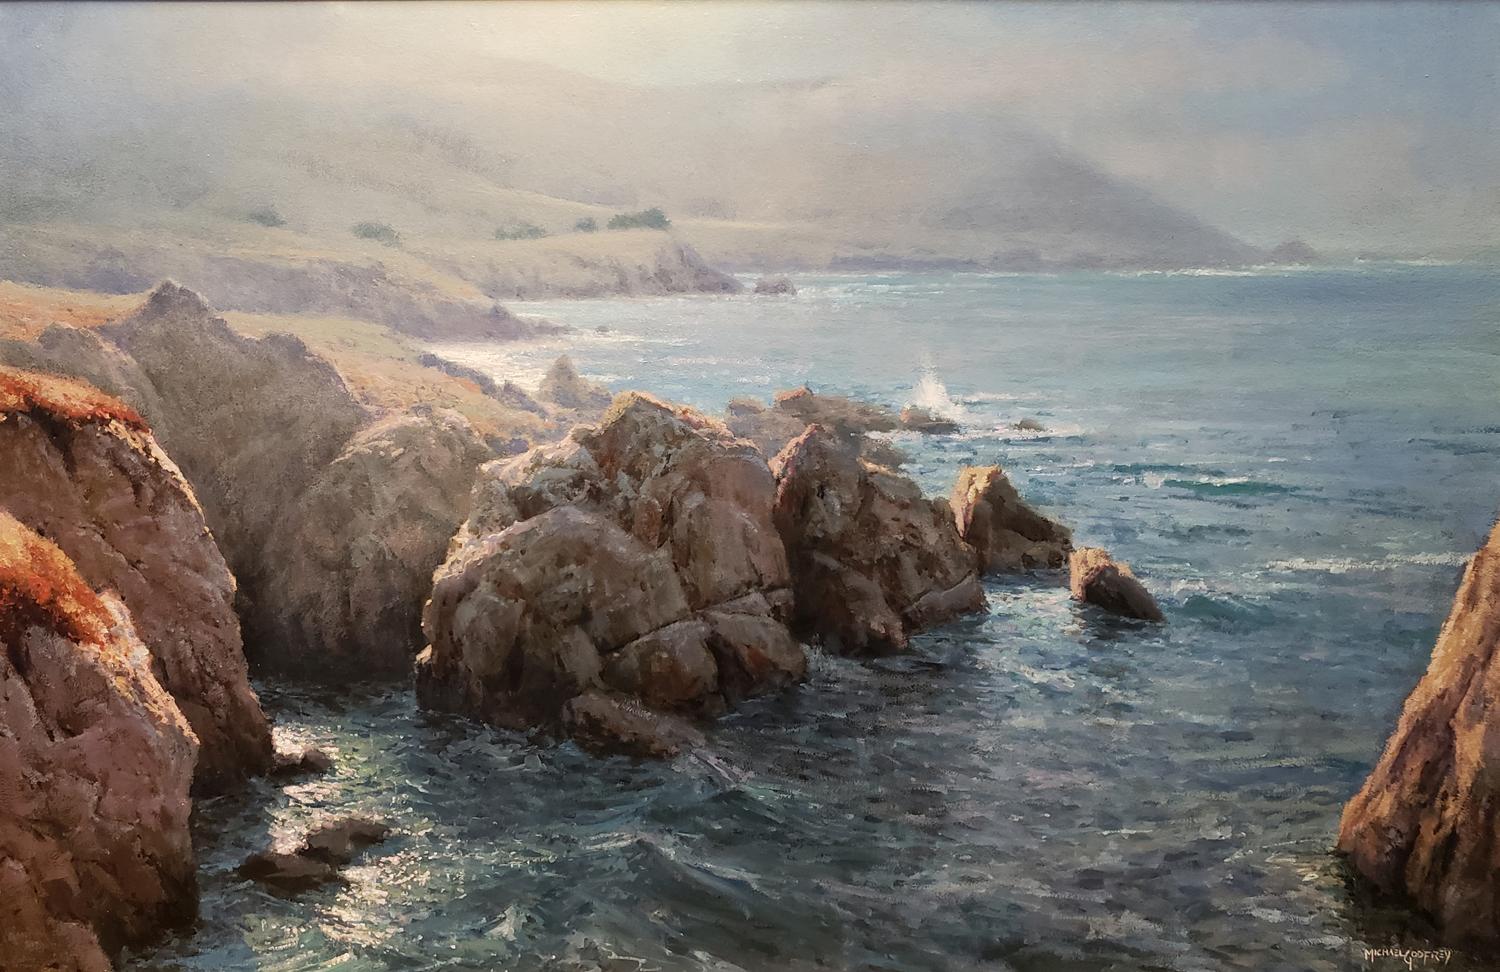 Morning Has Broken; Carmel, California - Painting by Michael Godfrey